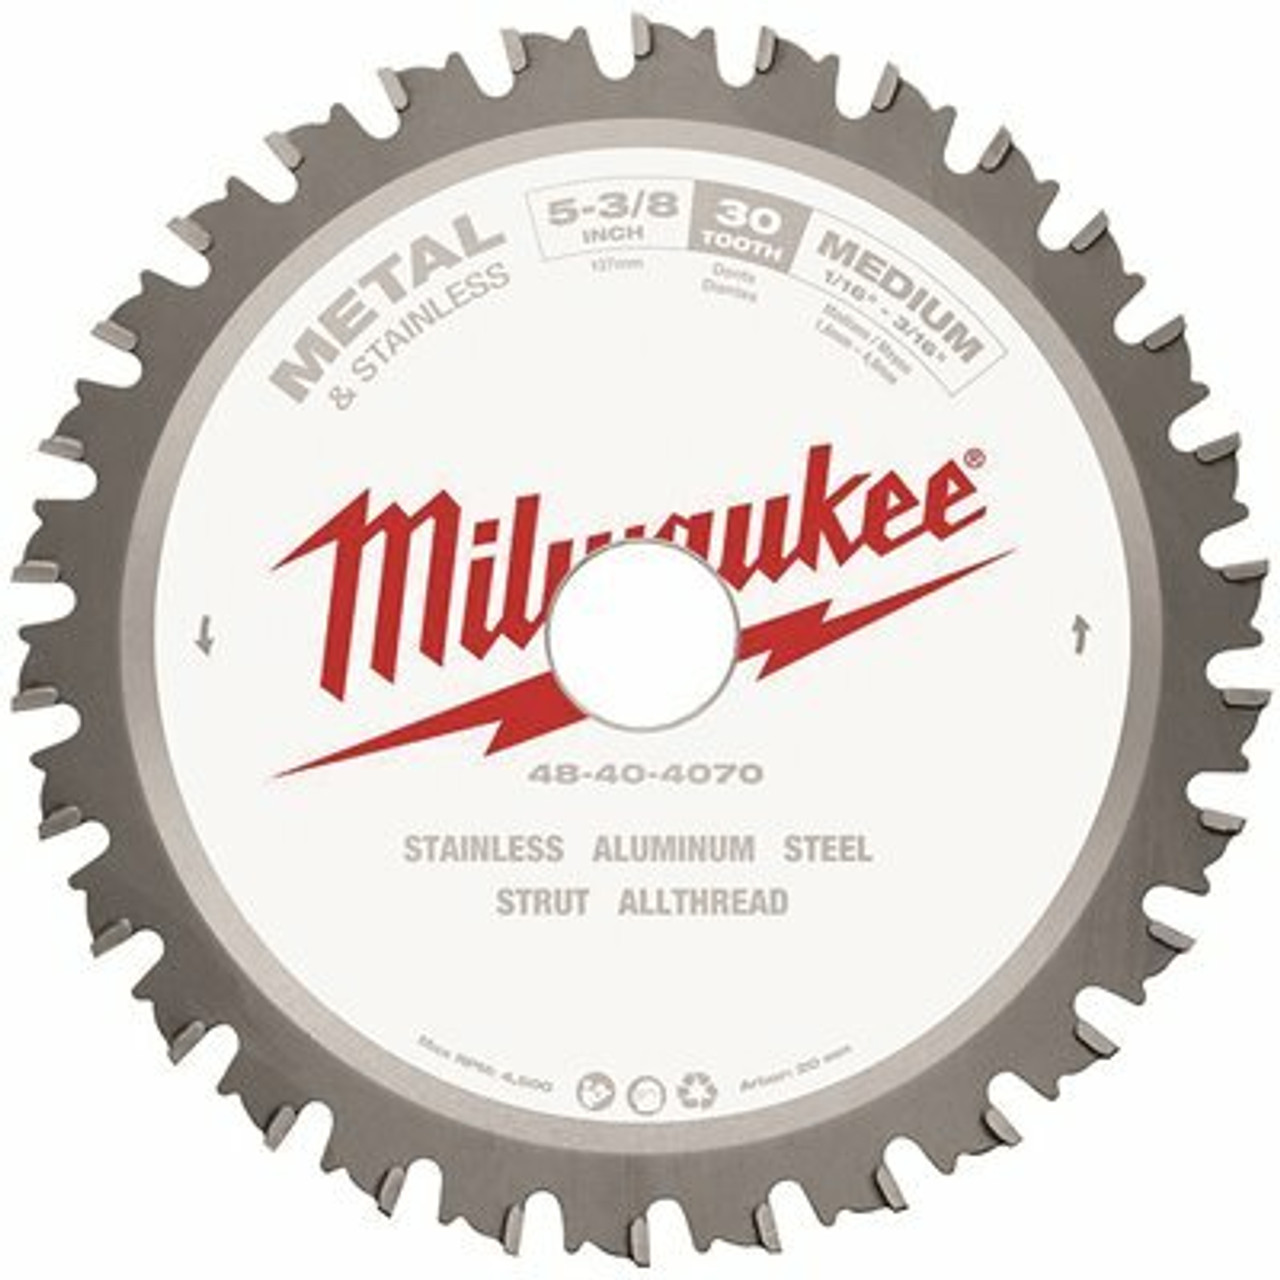 Milwaukee 5-3/8 In. X 30 Teeth Metal & Stainless Cutting Circular Saw Blade